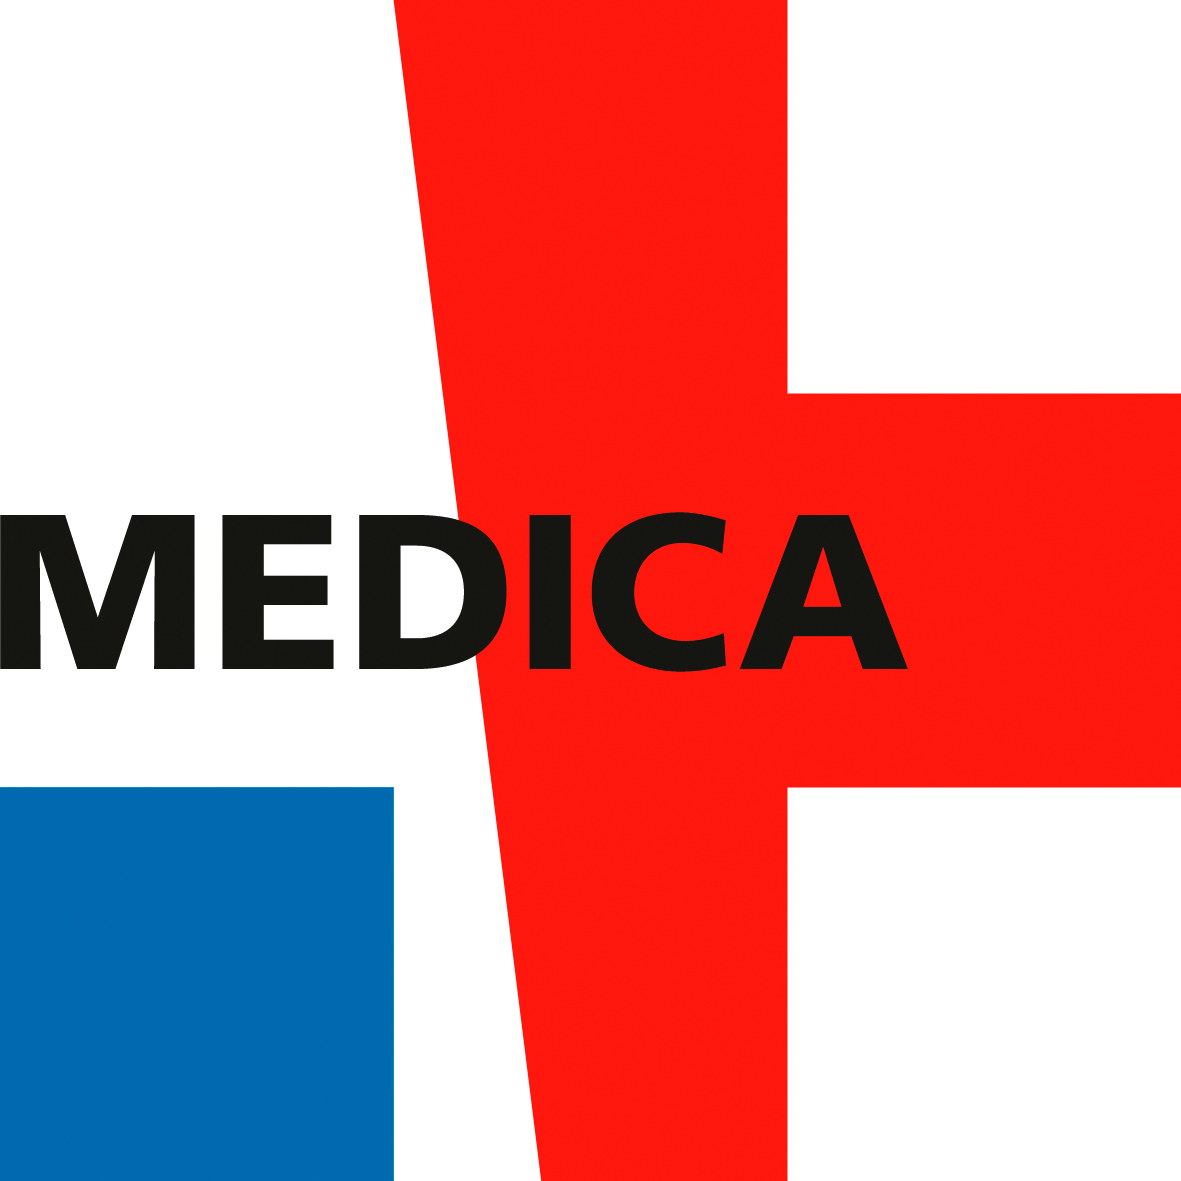 www.medica.de